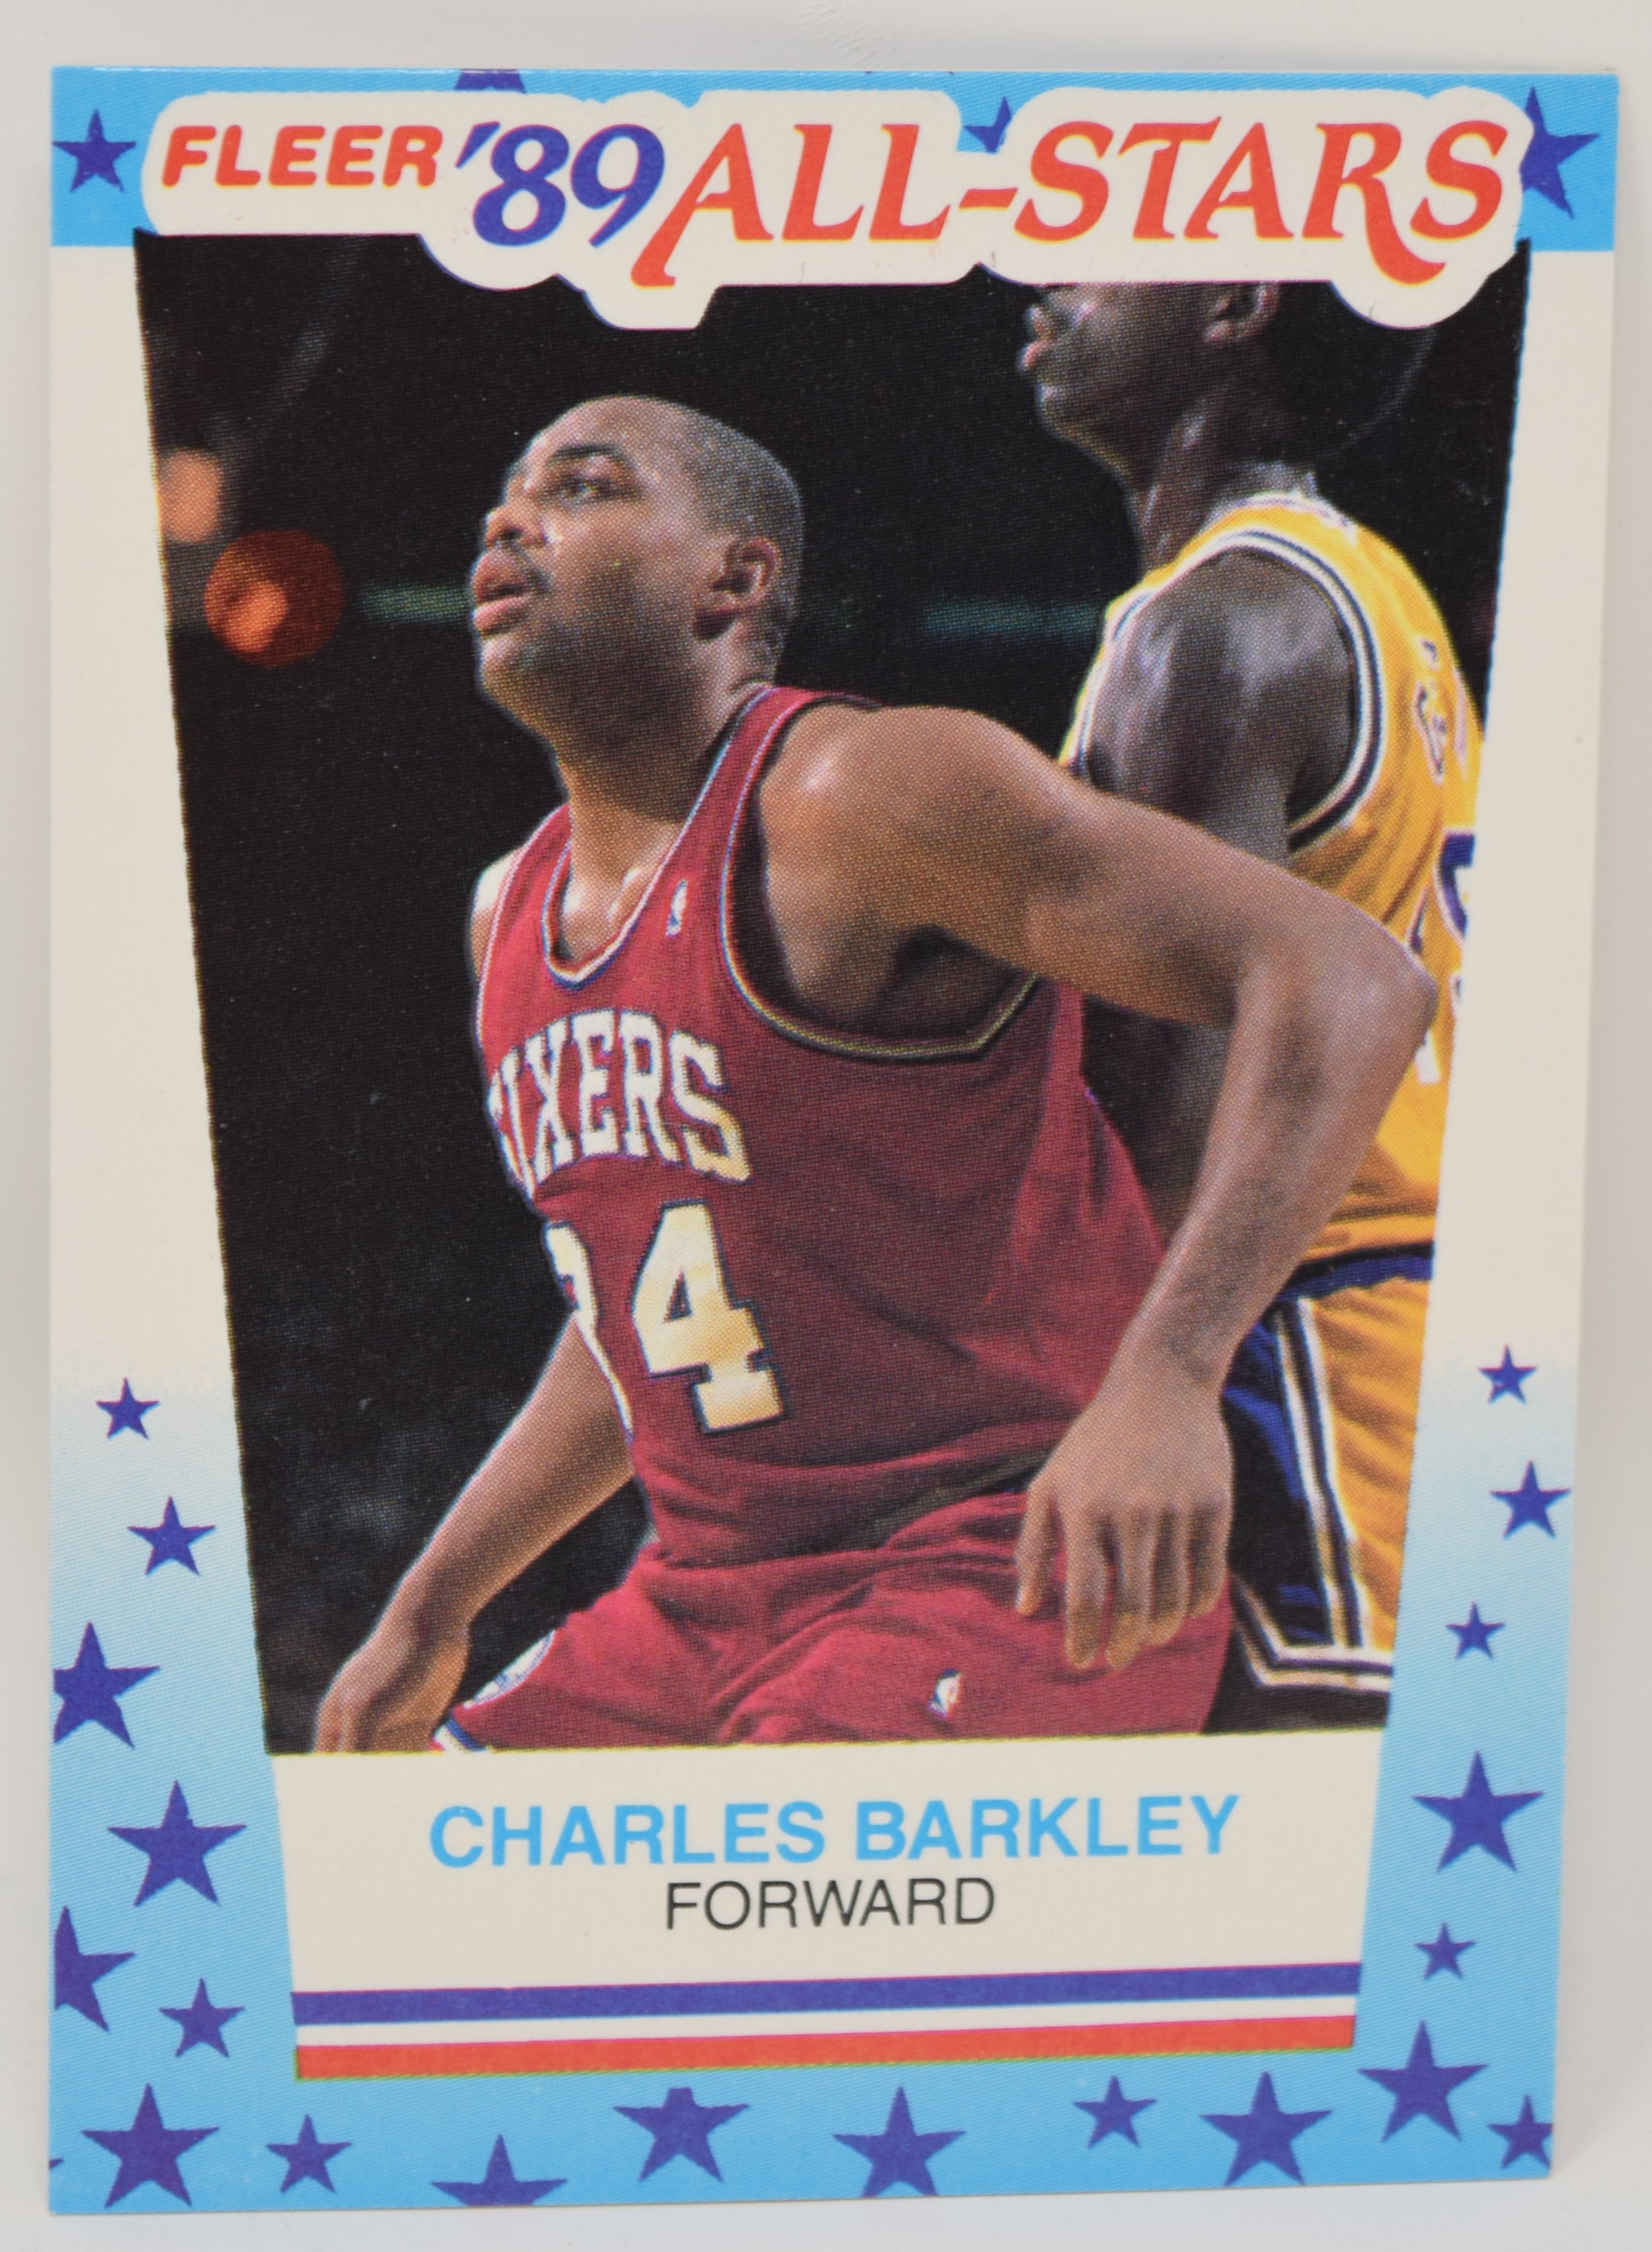 charles barkley rookie card